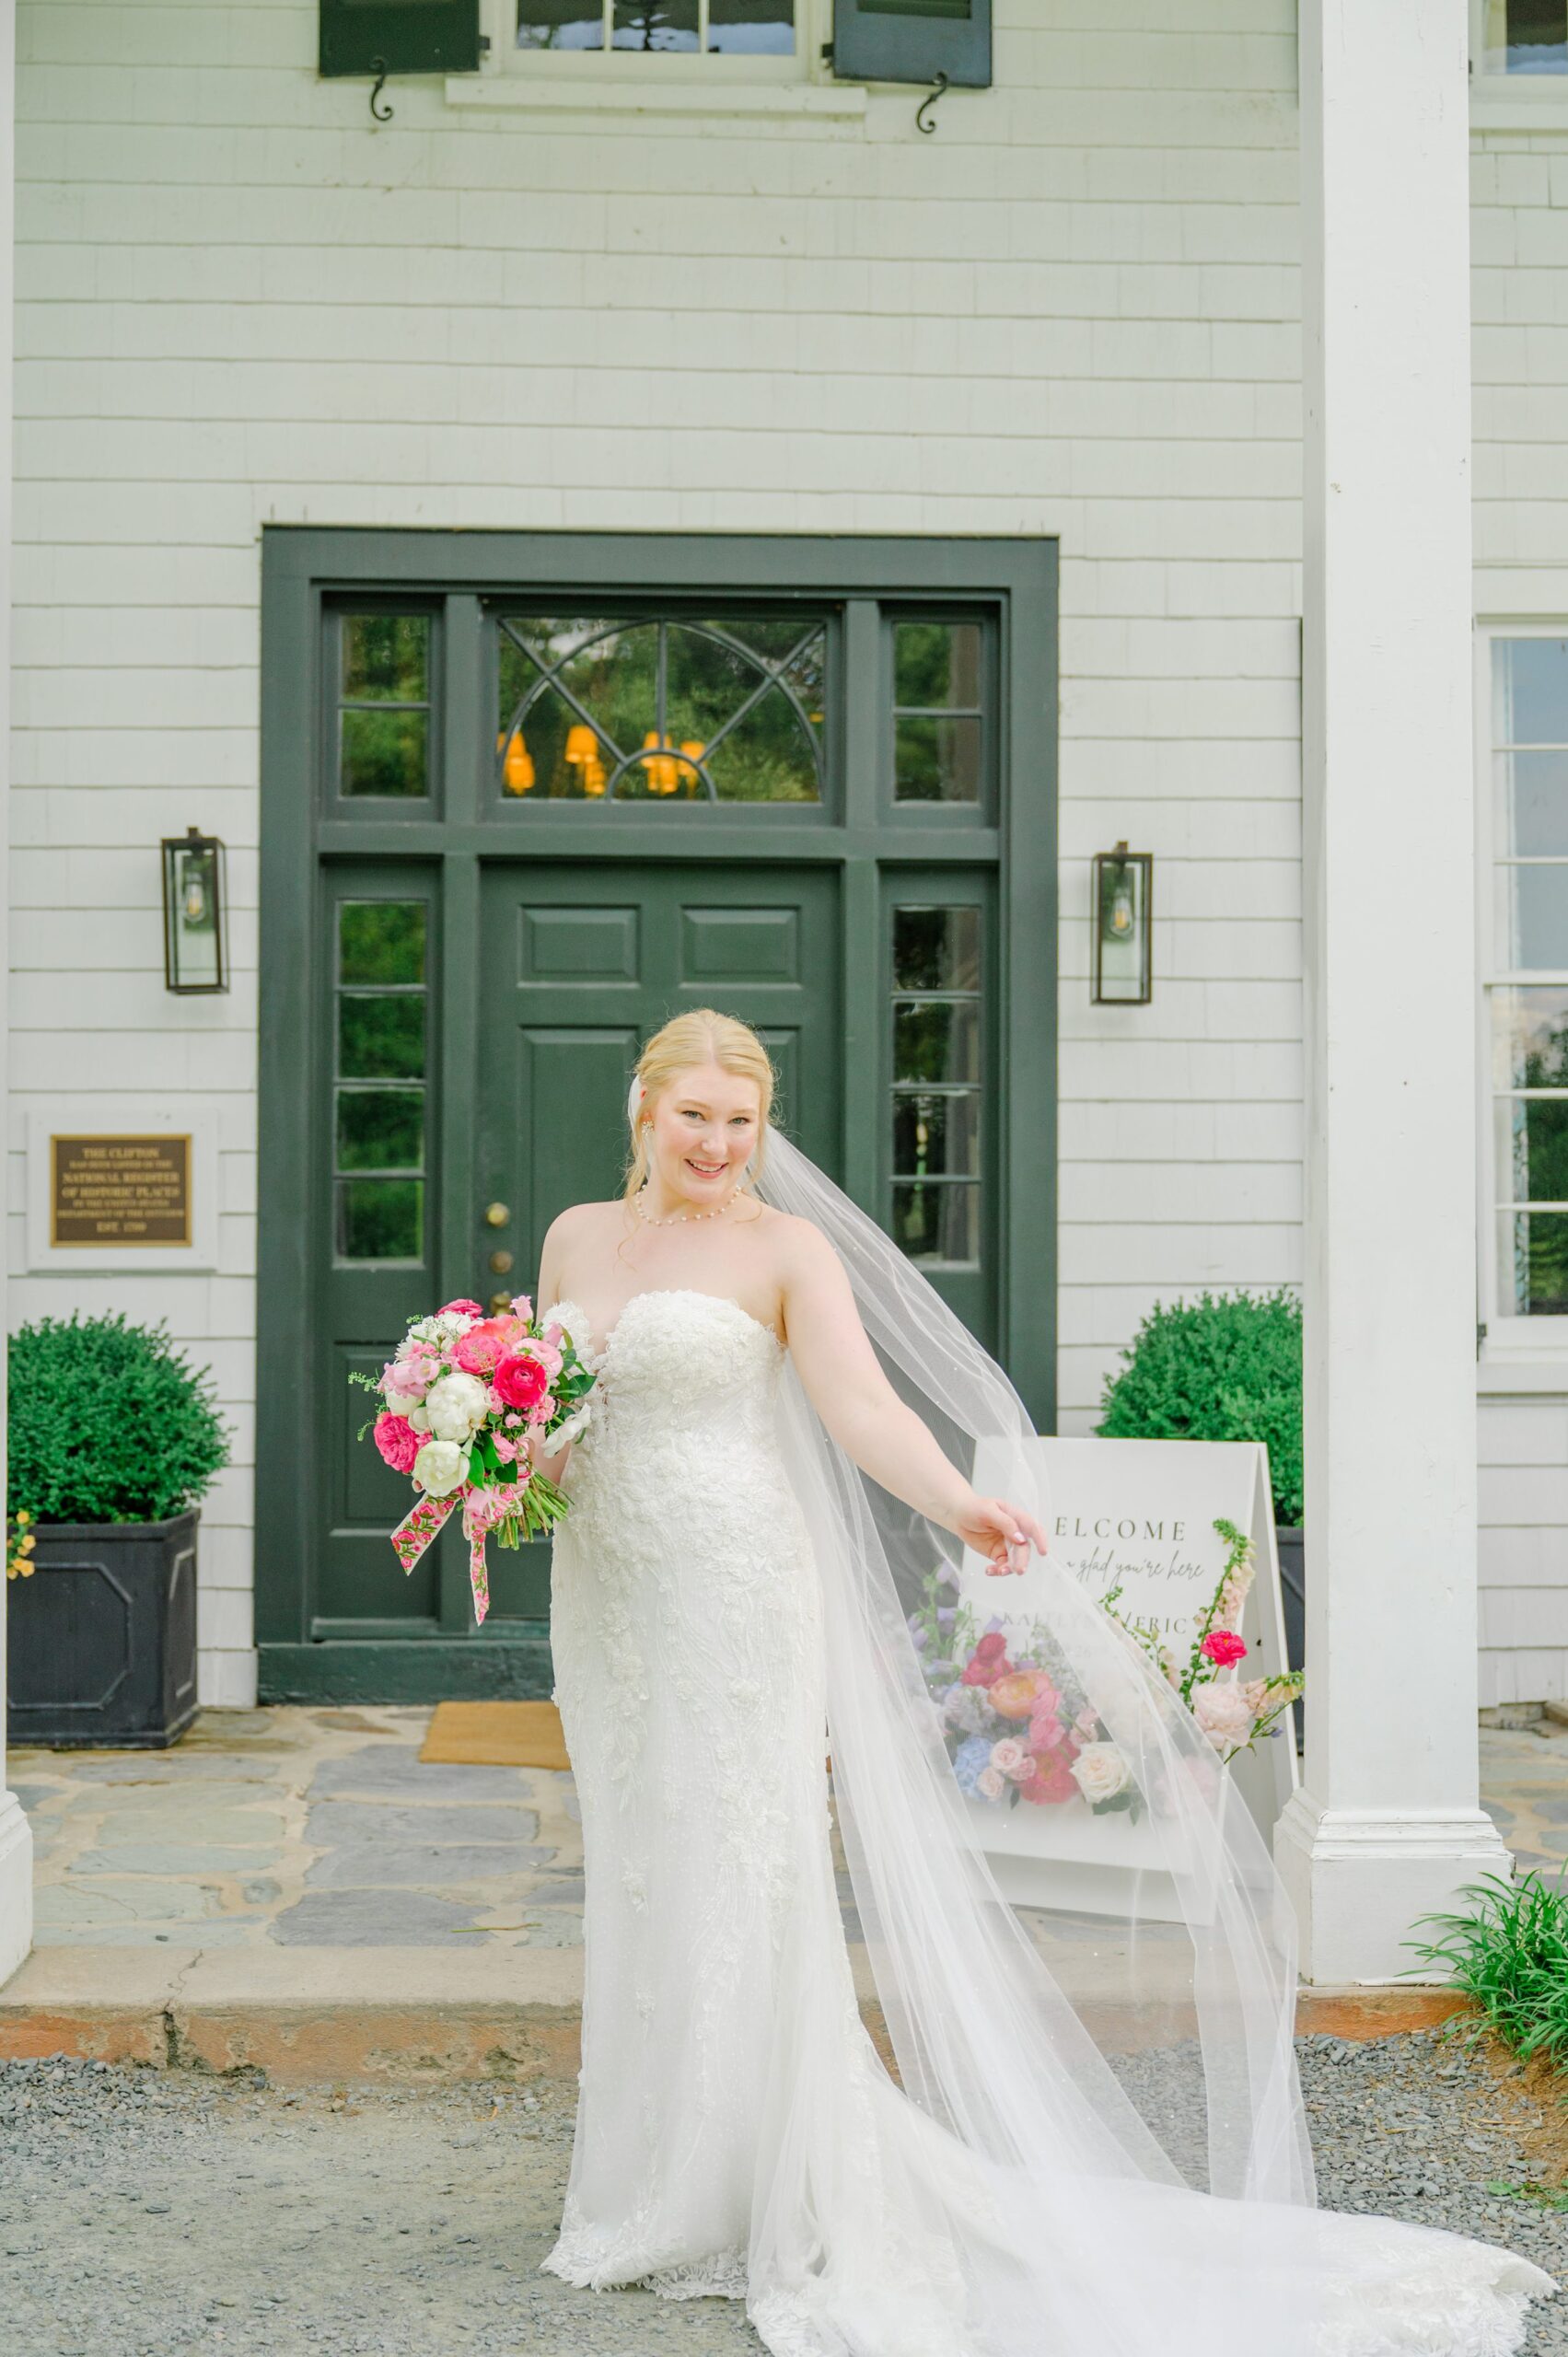 Intimate Clifton Inn Wedding in Charlottesville, Virginia photographed by Baltimore Wedding Photographer Cait Kramer.